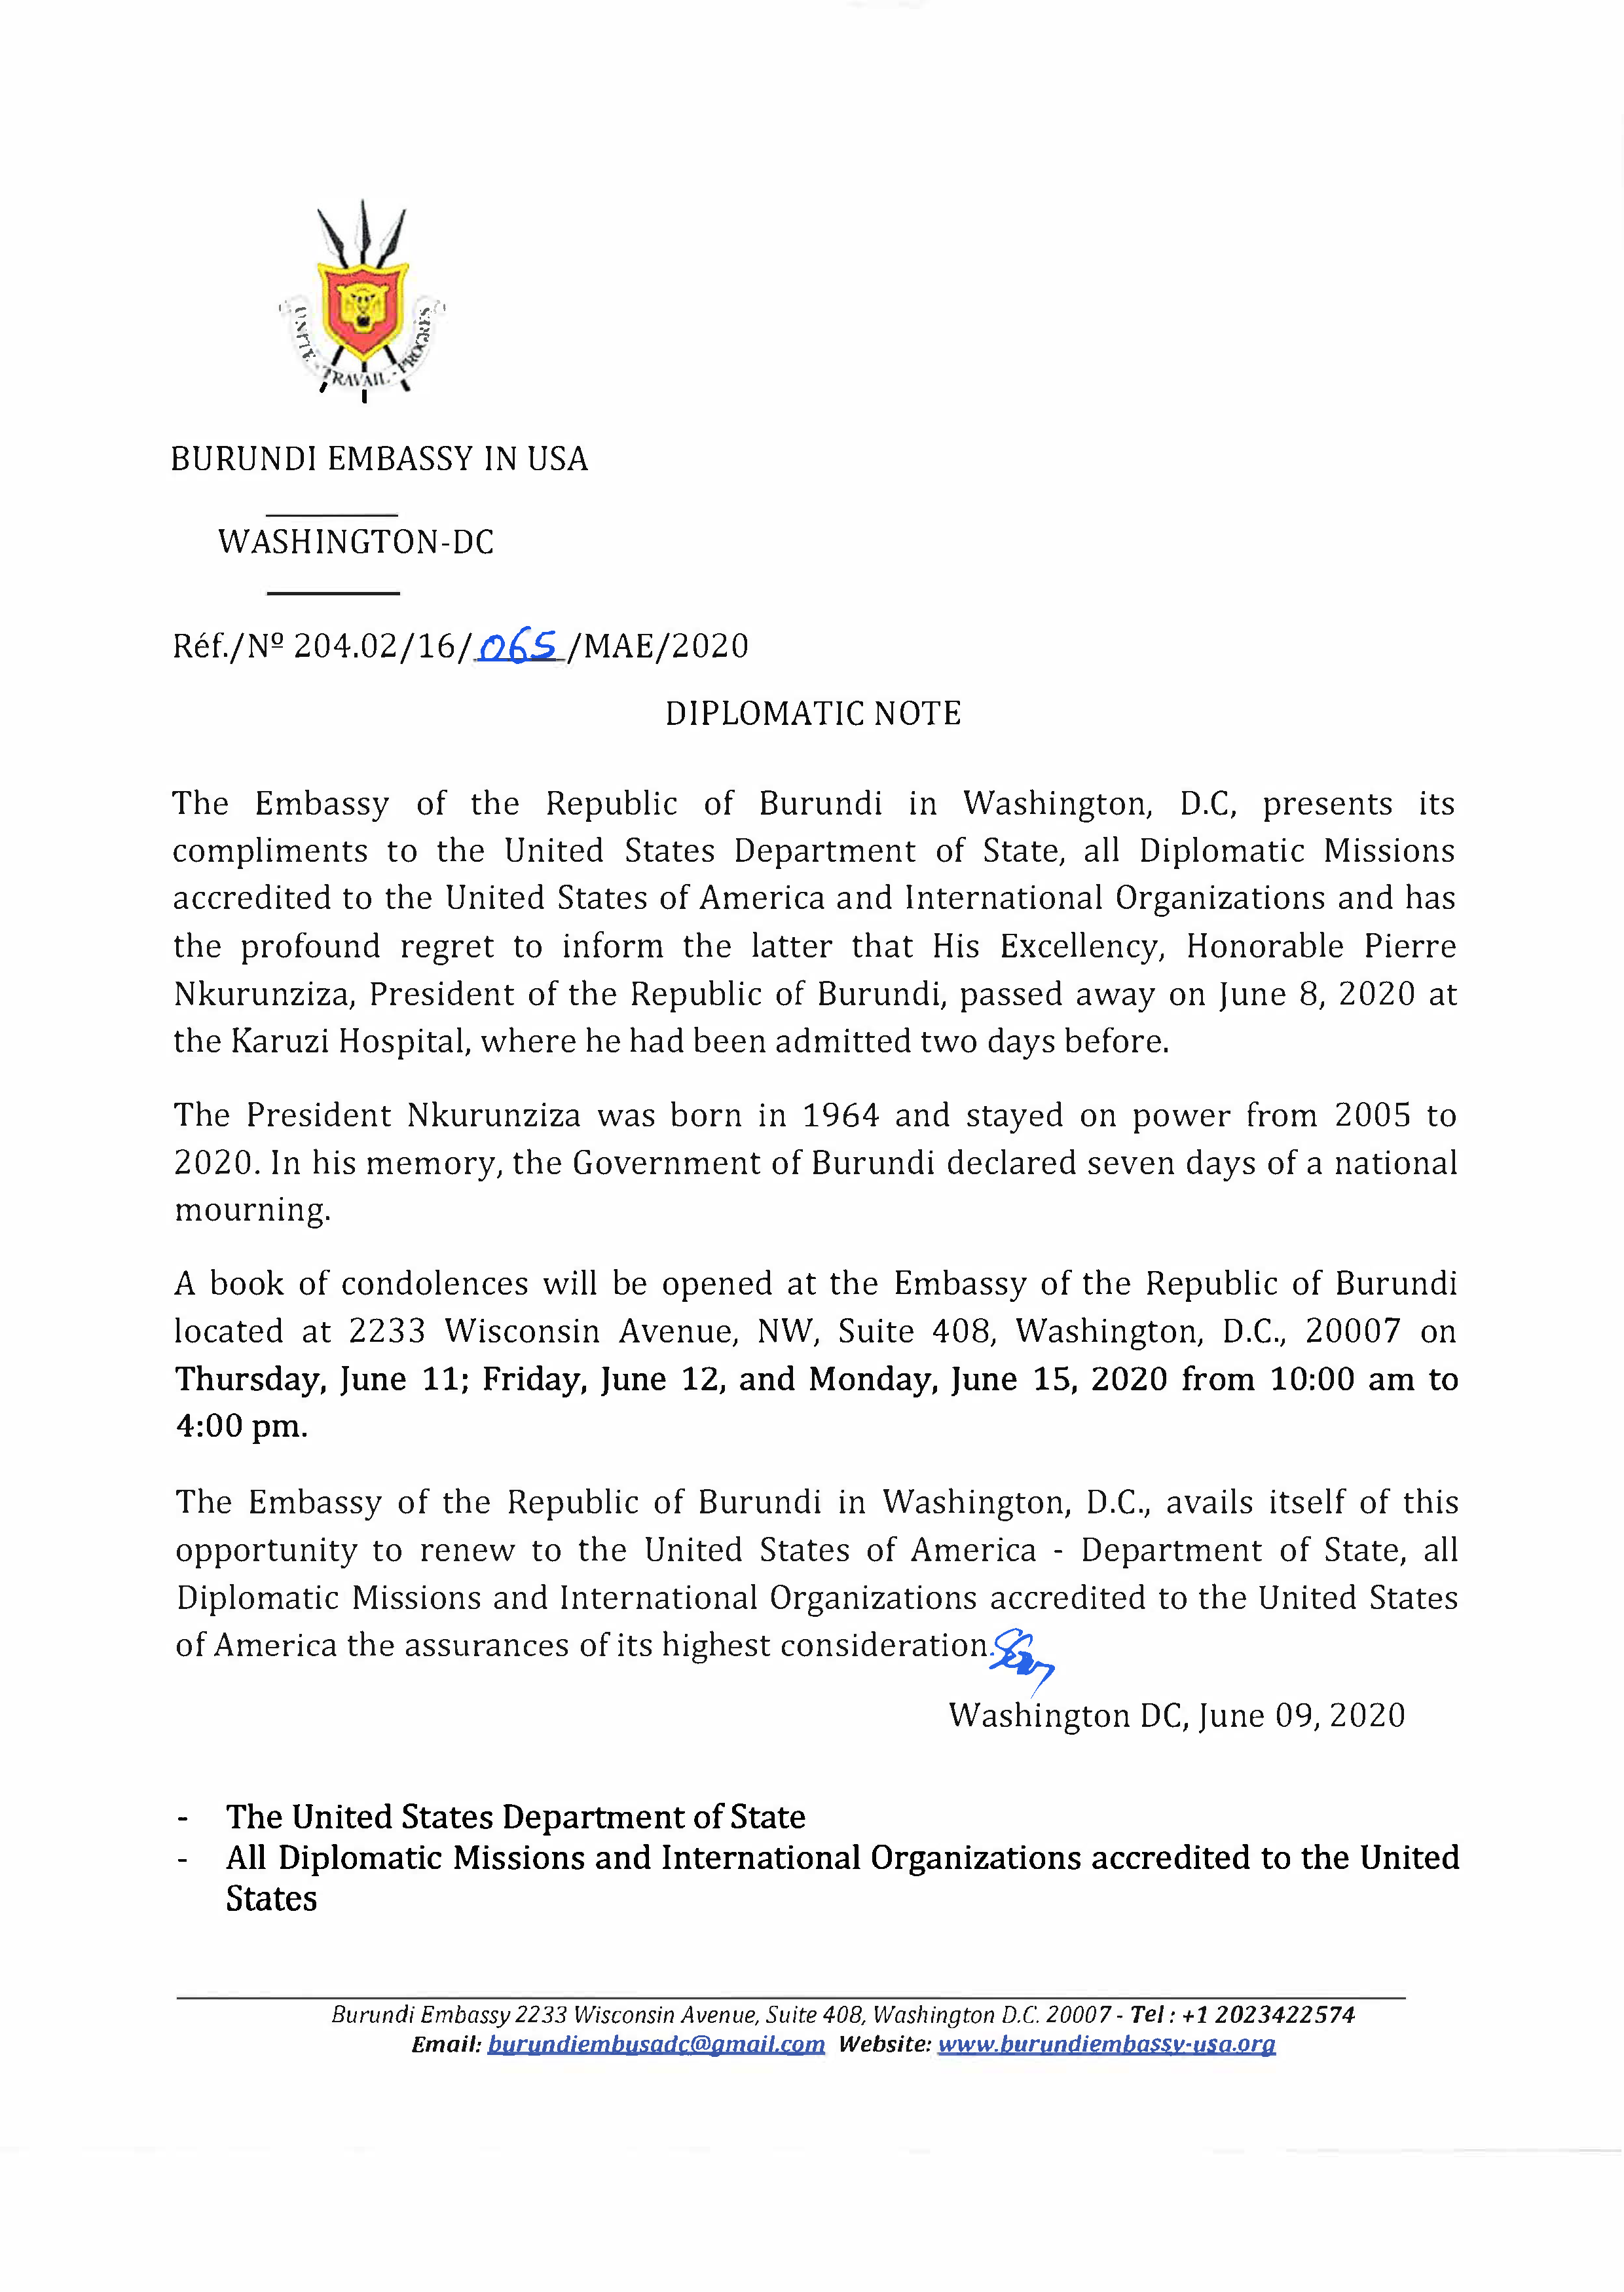 Communiqué on the Passing Away of President Pierre Nkurunziza